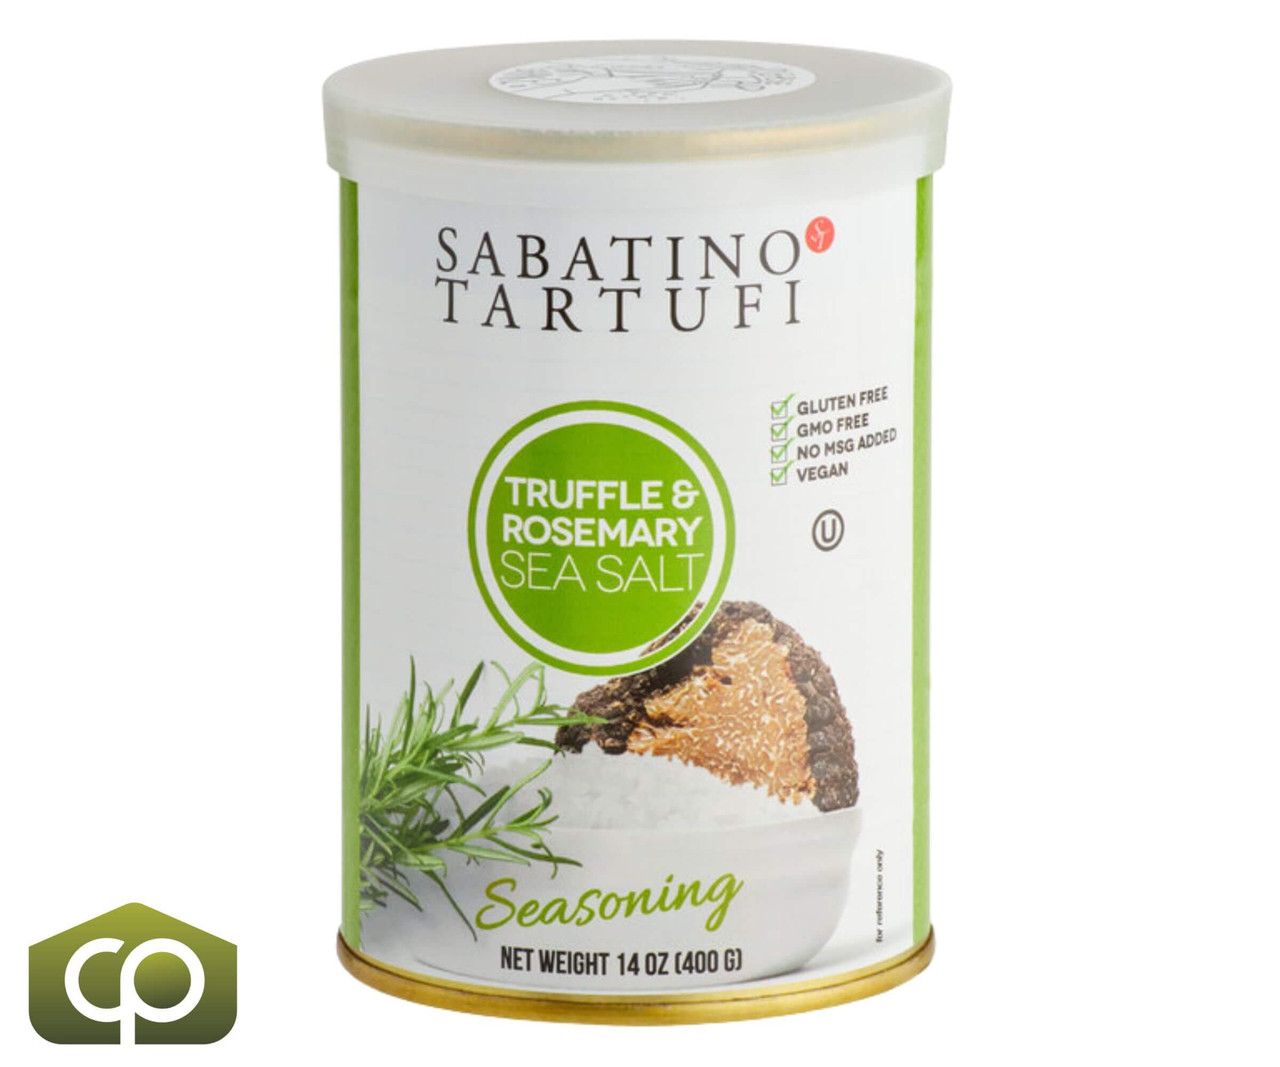 Sabatino Tartufi 14 oz. Truffle & Rosemary Sea Salt - Rich Truffle, Sea Salt - Chicken Pieces